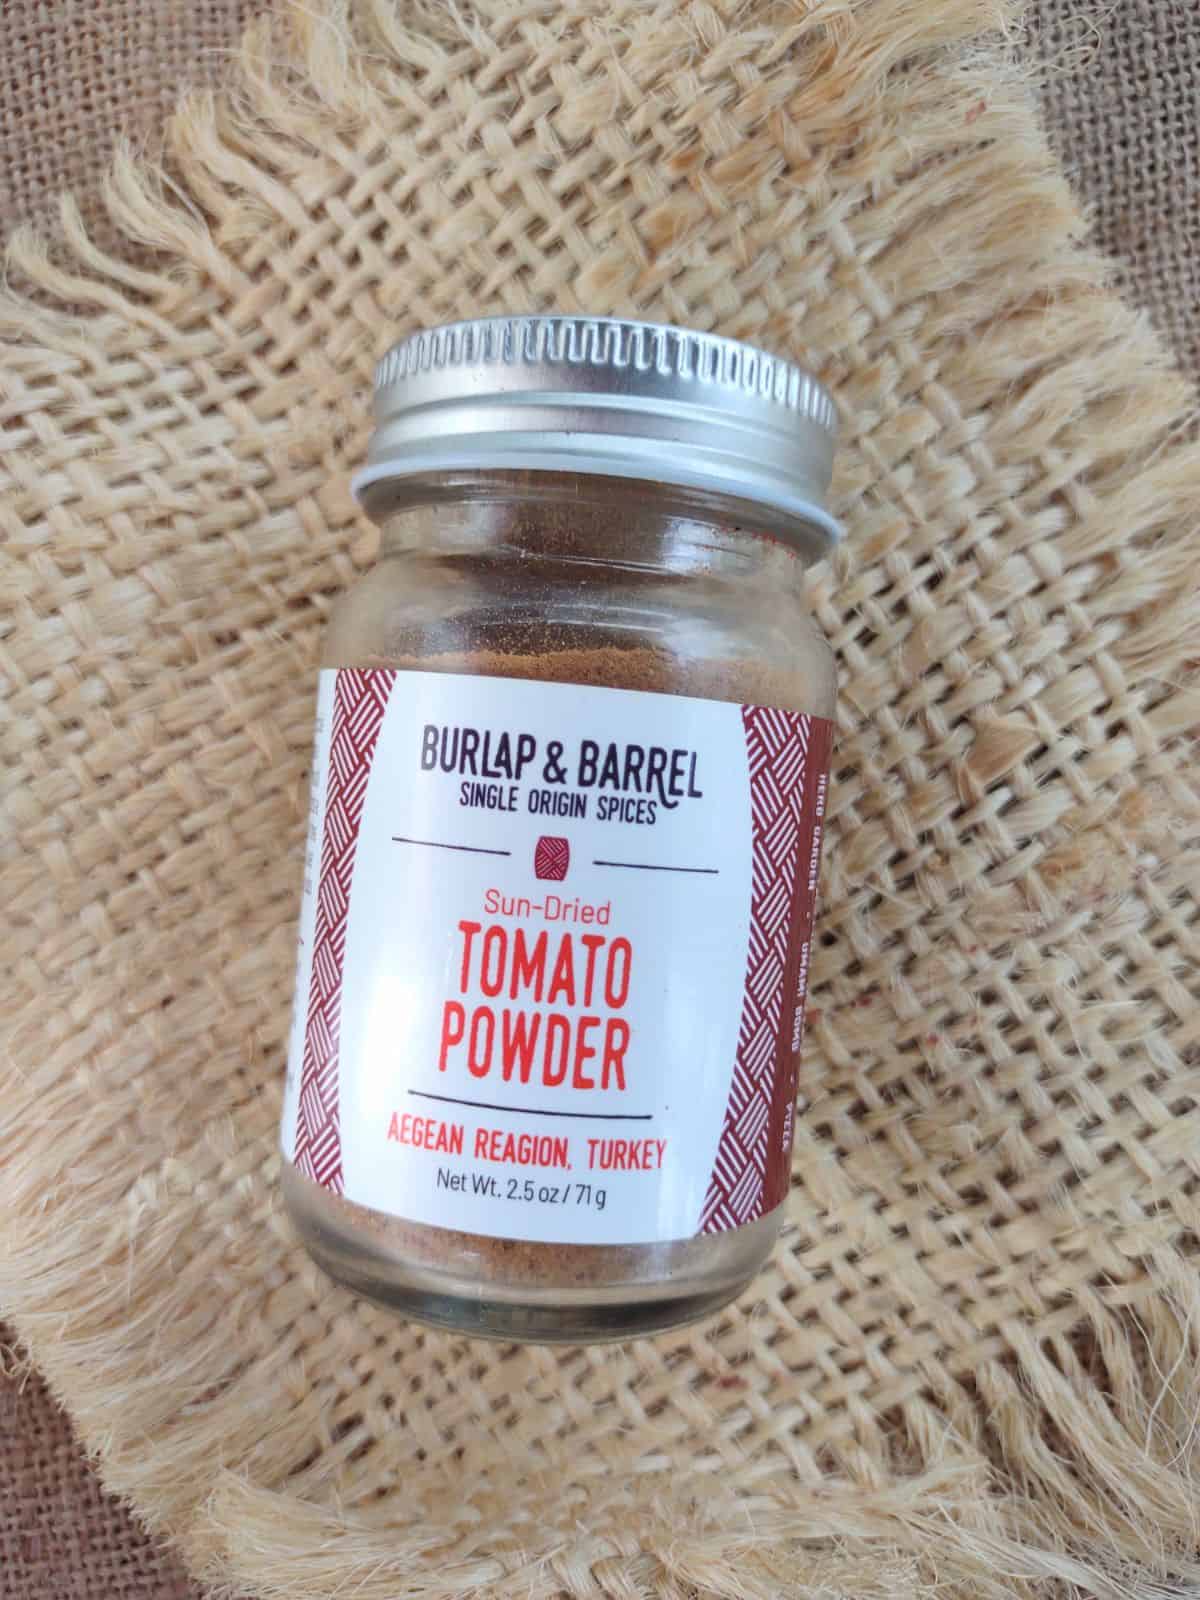 A jar of Burlap & Barrel Sun-Dried Tomato Powder on a piece of burlap.